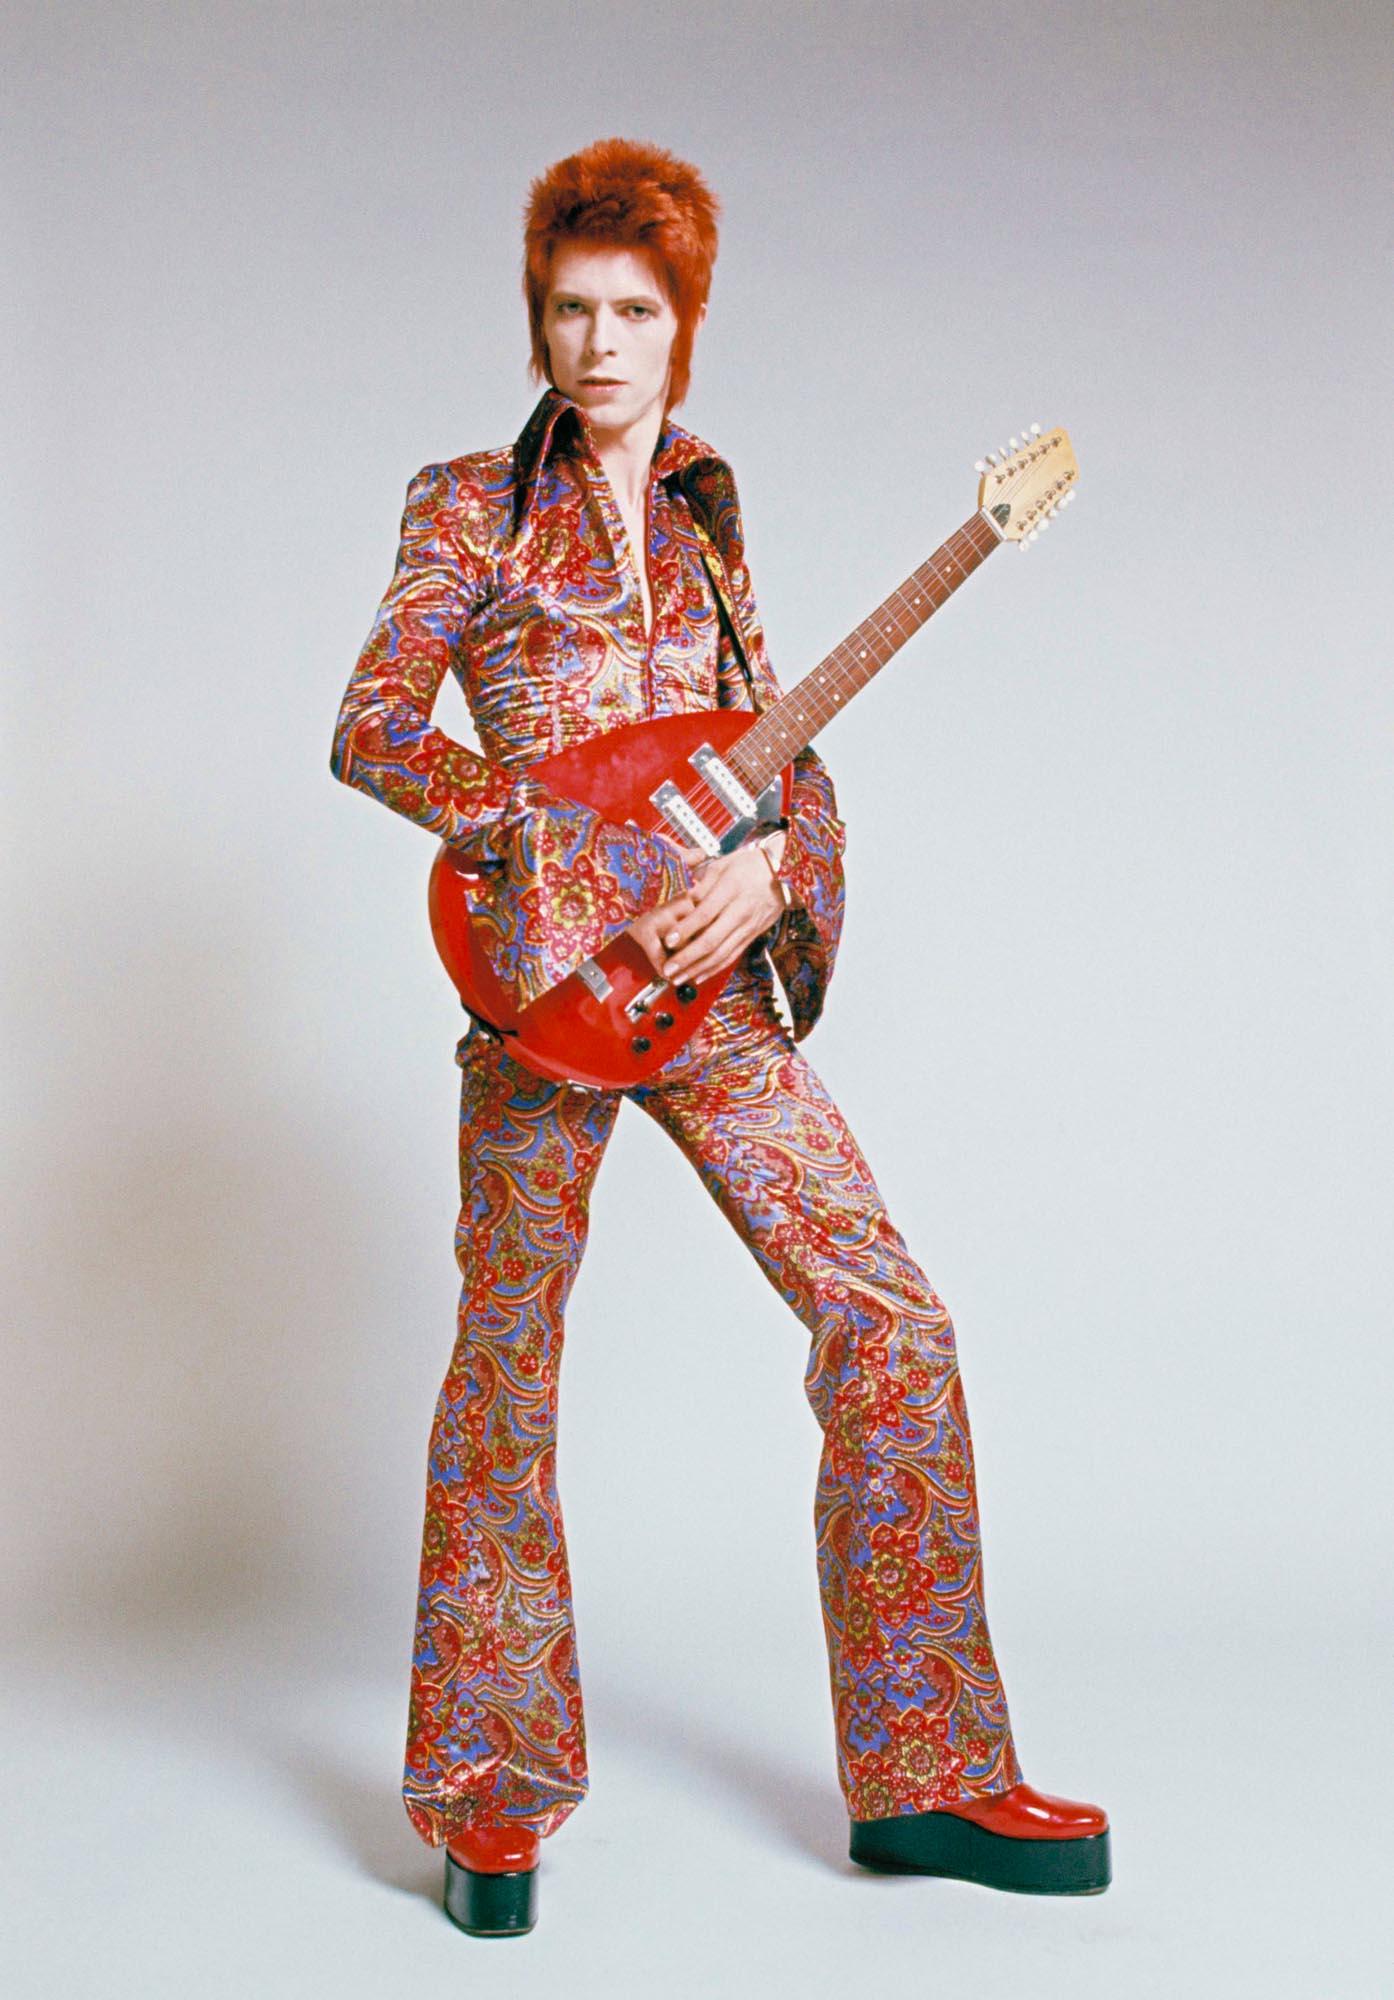 Masayoshi Sukita Portrait Photograph - David Bowie "The First Time I Saw You" 1972 by Sukita